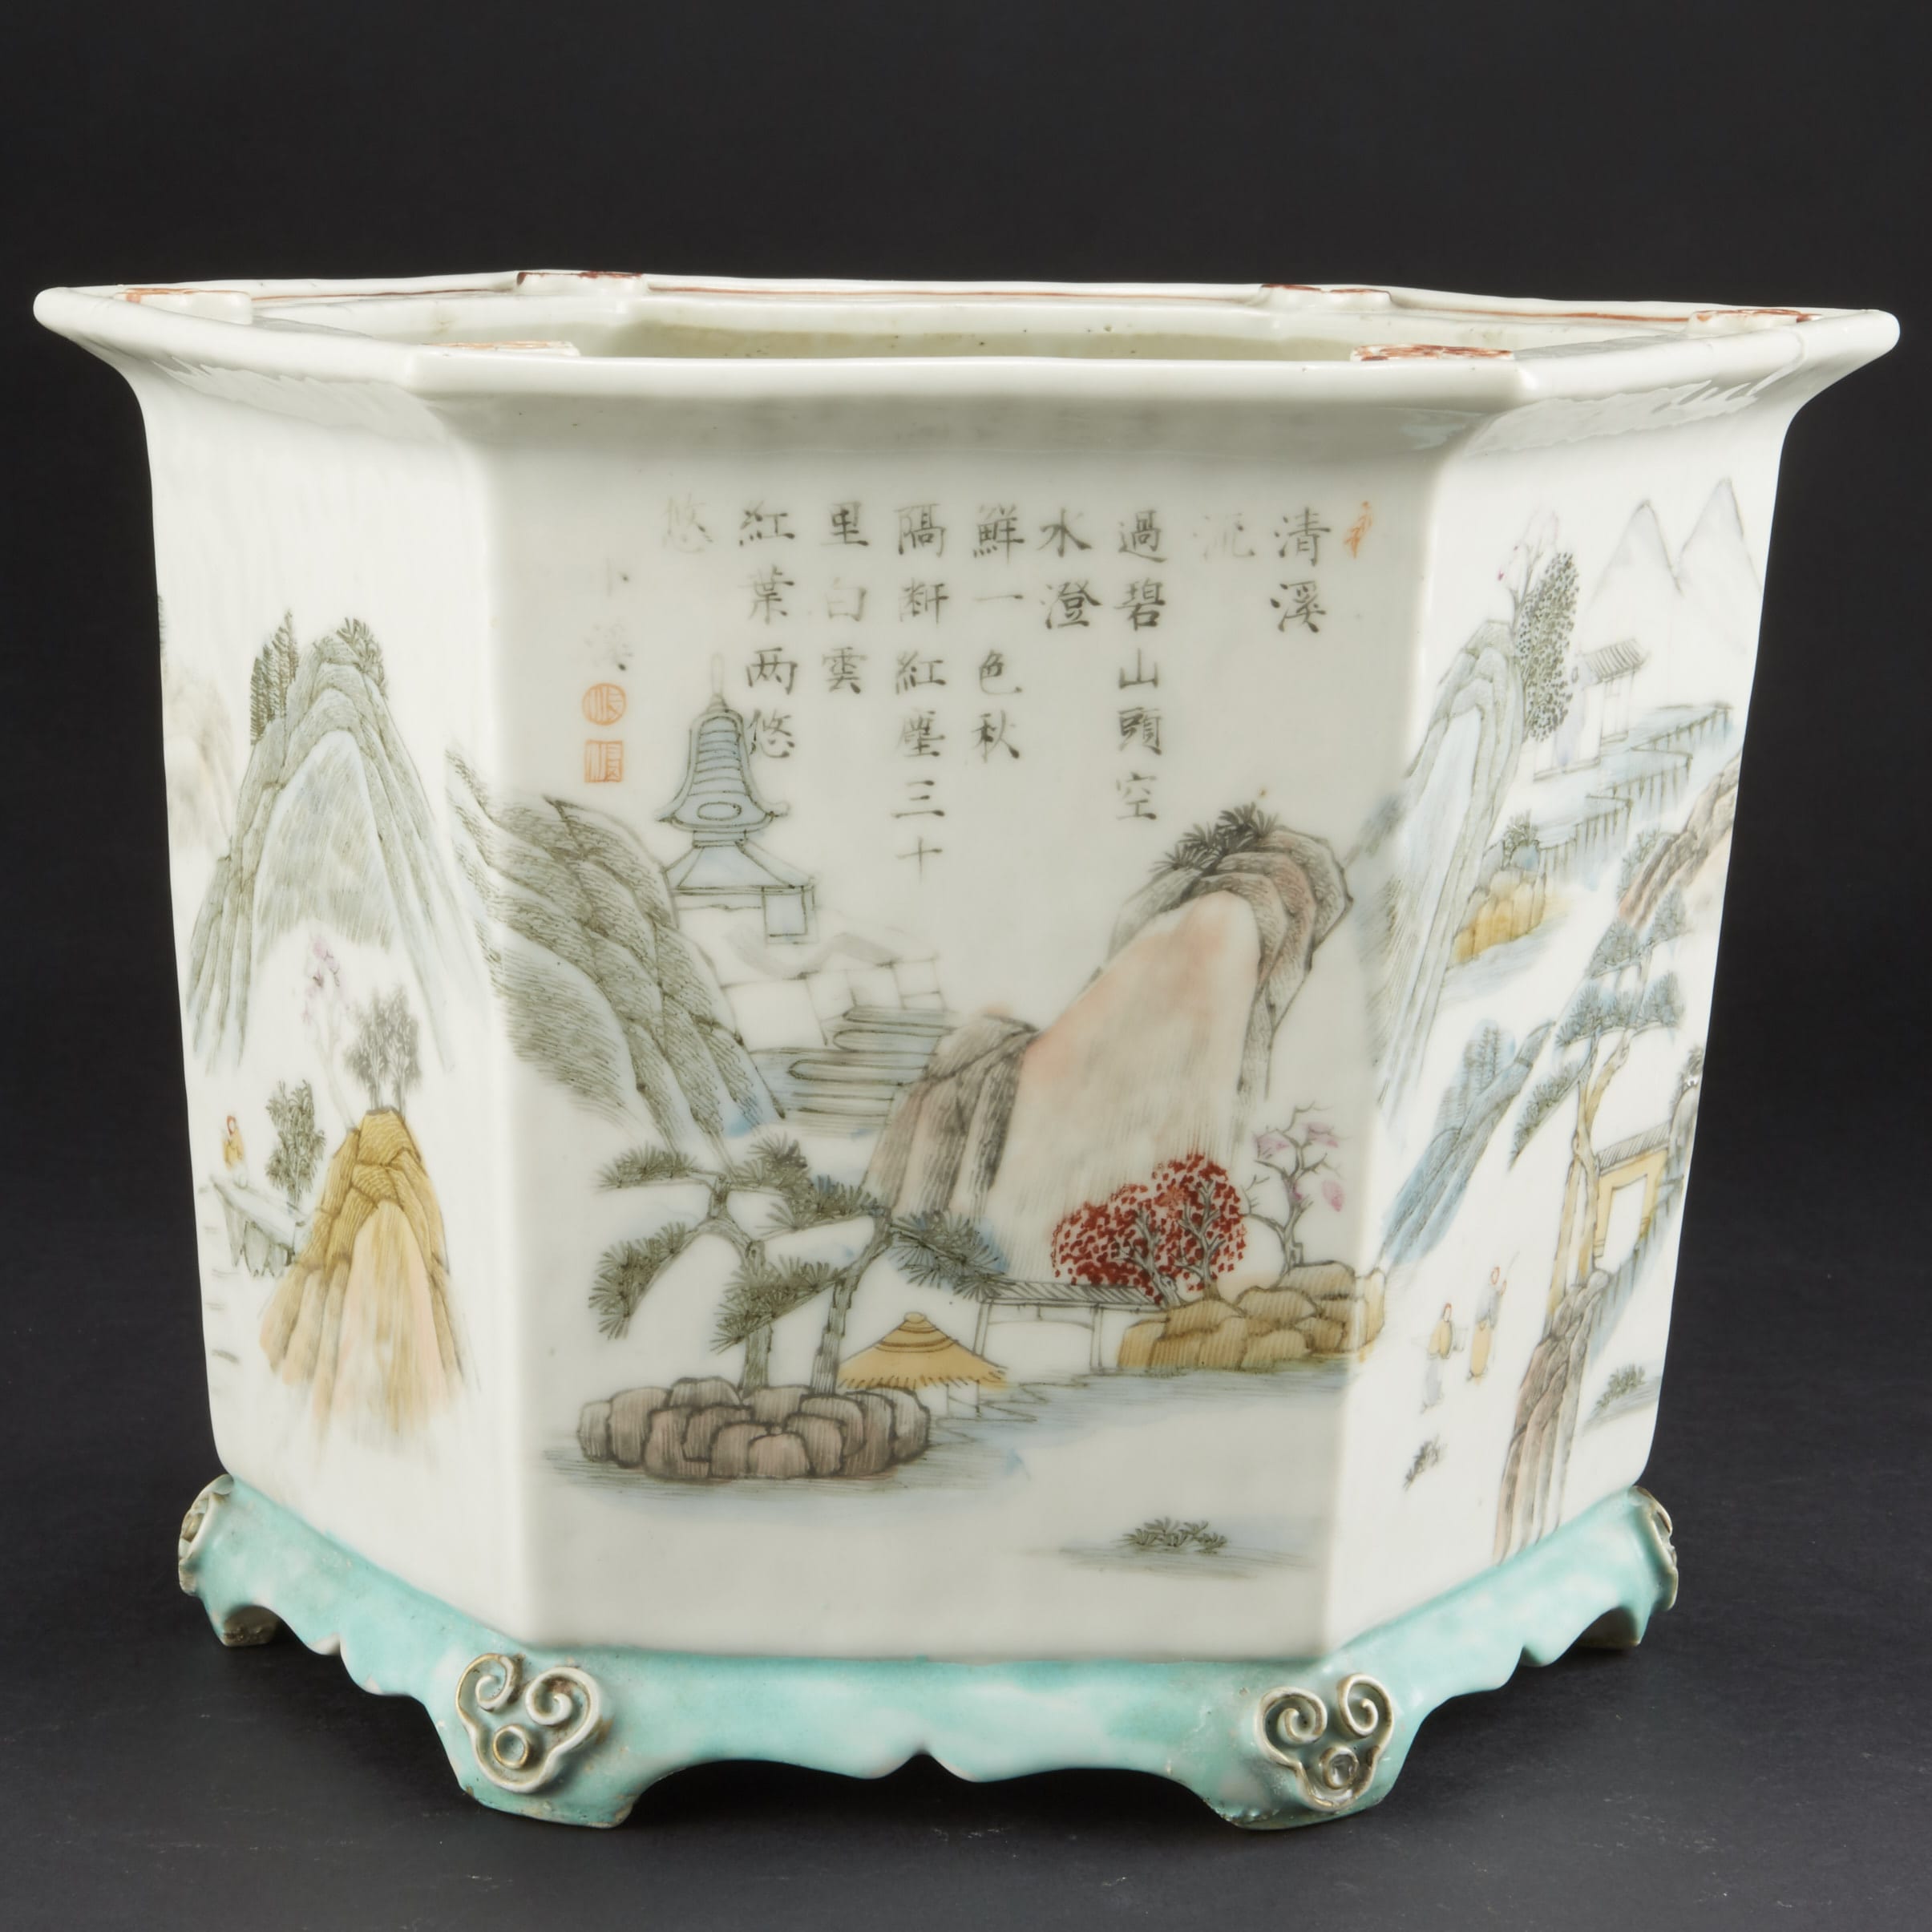 Lot 061: Chinese Hexagonal Famille Rose Porcelain Cache-Pot